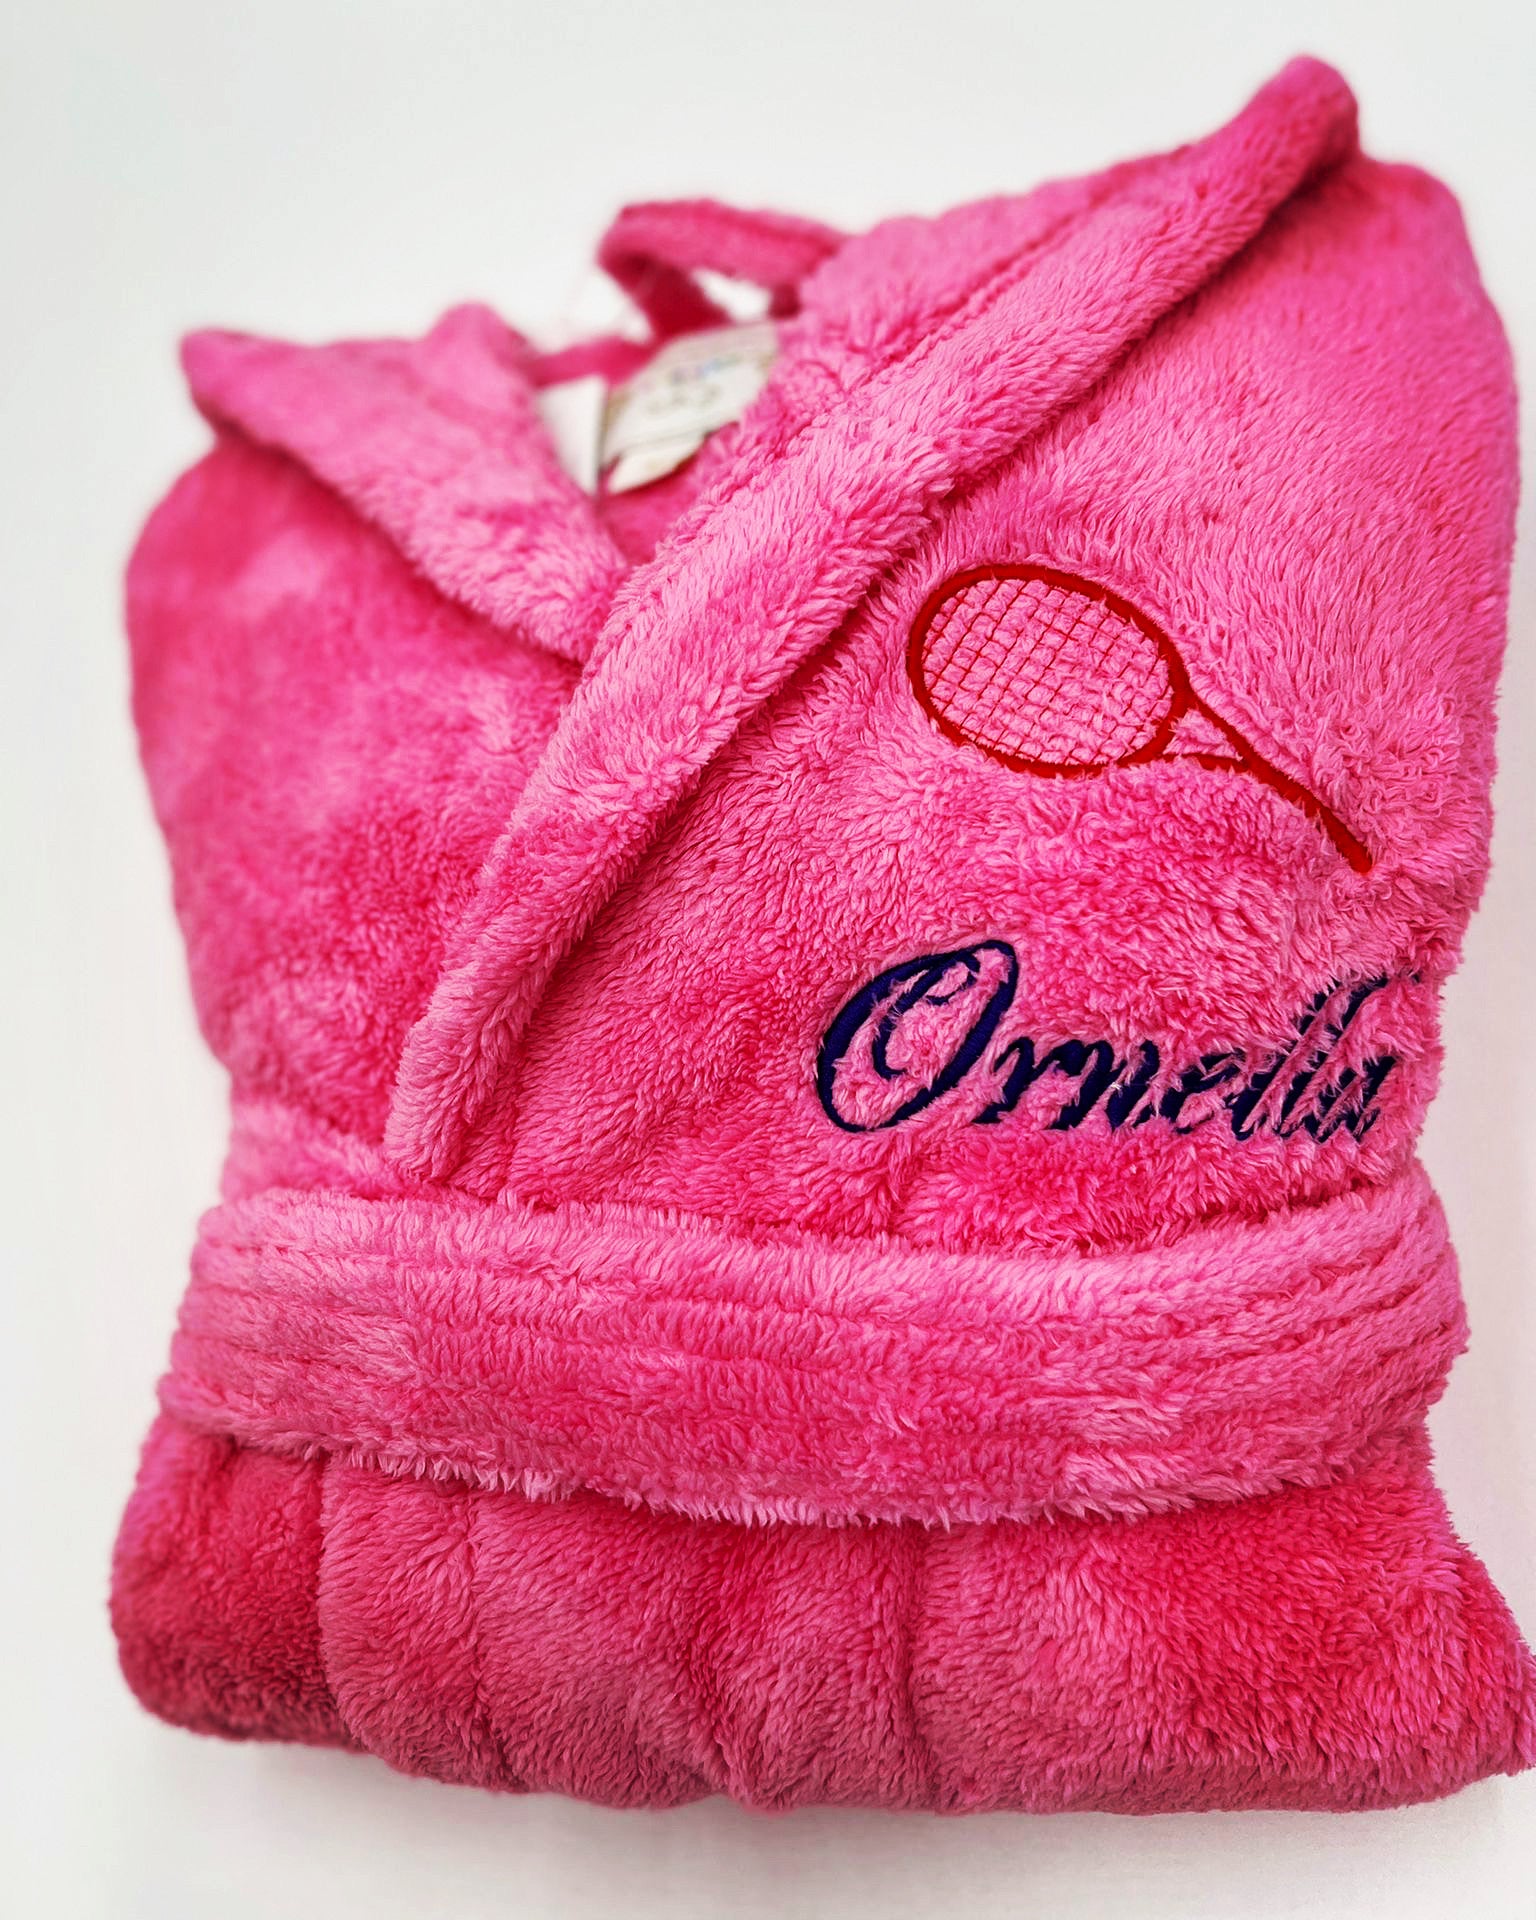 Kids Fleece, Plush, Soft and Warm Hooded Bathrobe for Girls, Made in Turkey - www.towel.com